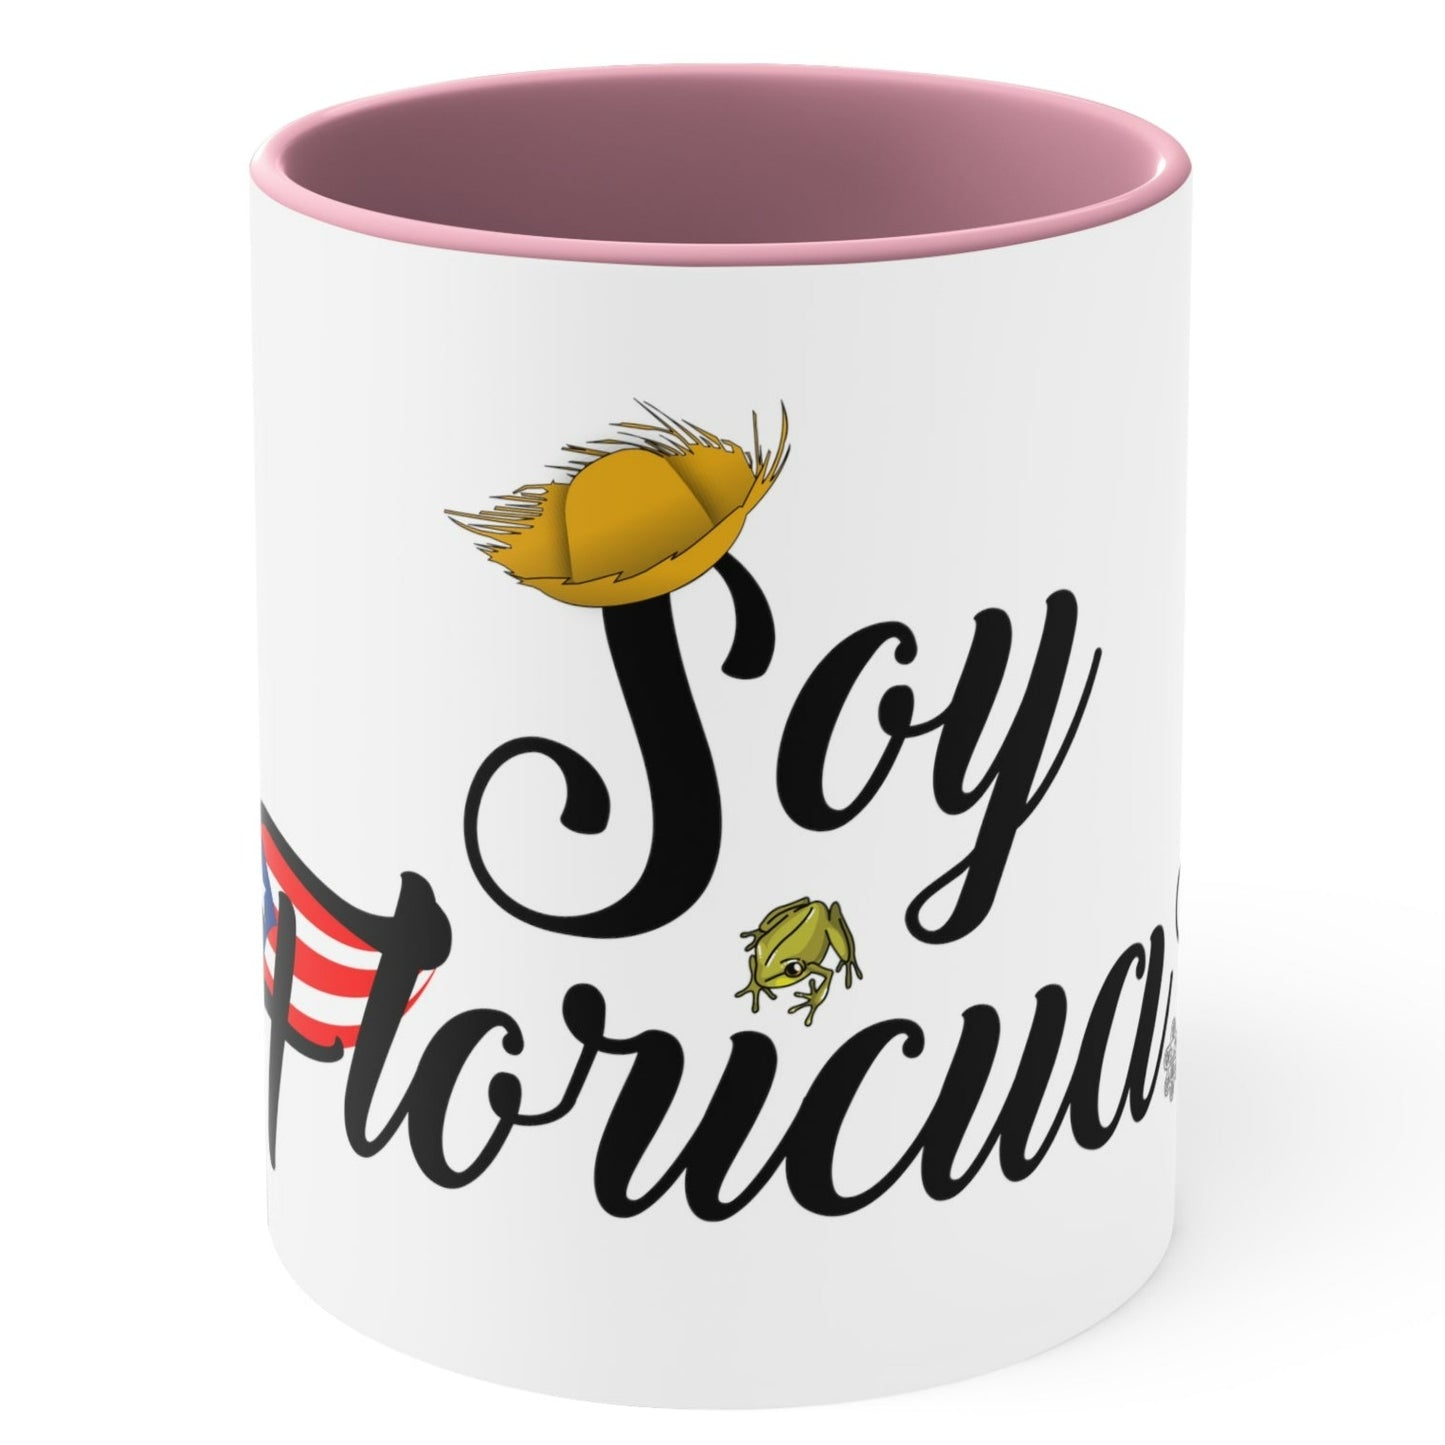 SOY FLORICUA® Trademark Official MUG - My Life and Heart is Between Puerto Rico and Florida - Mugscity